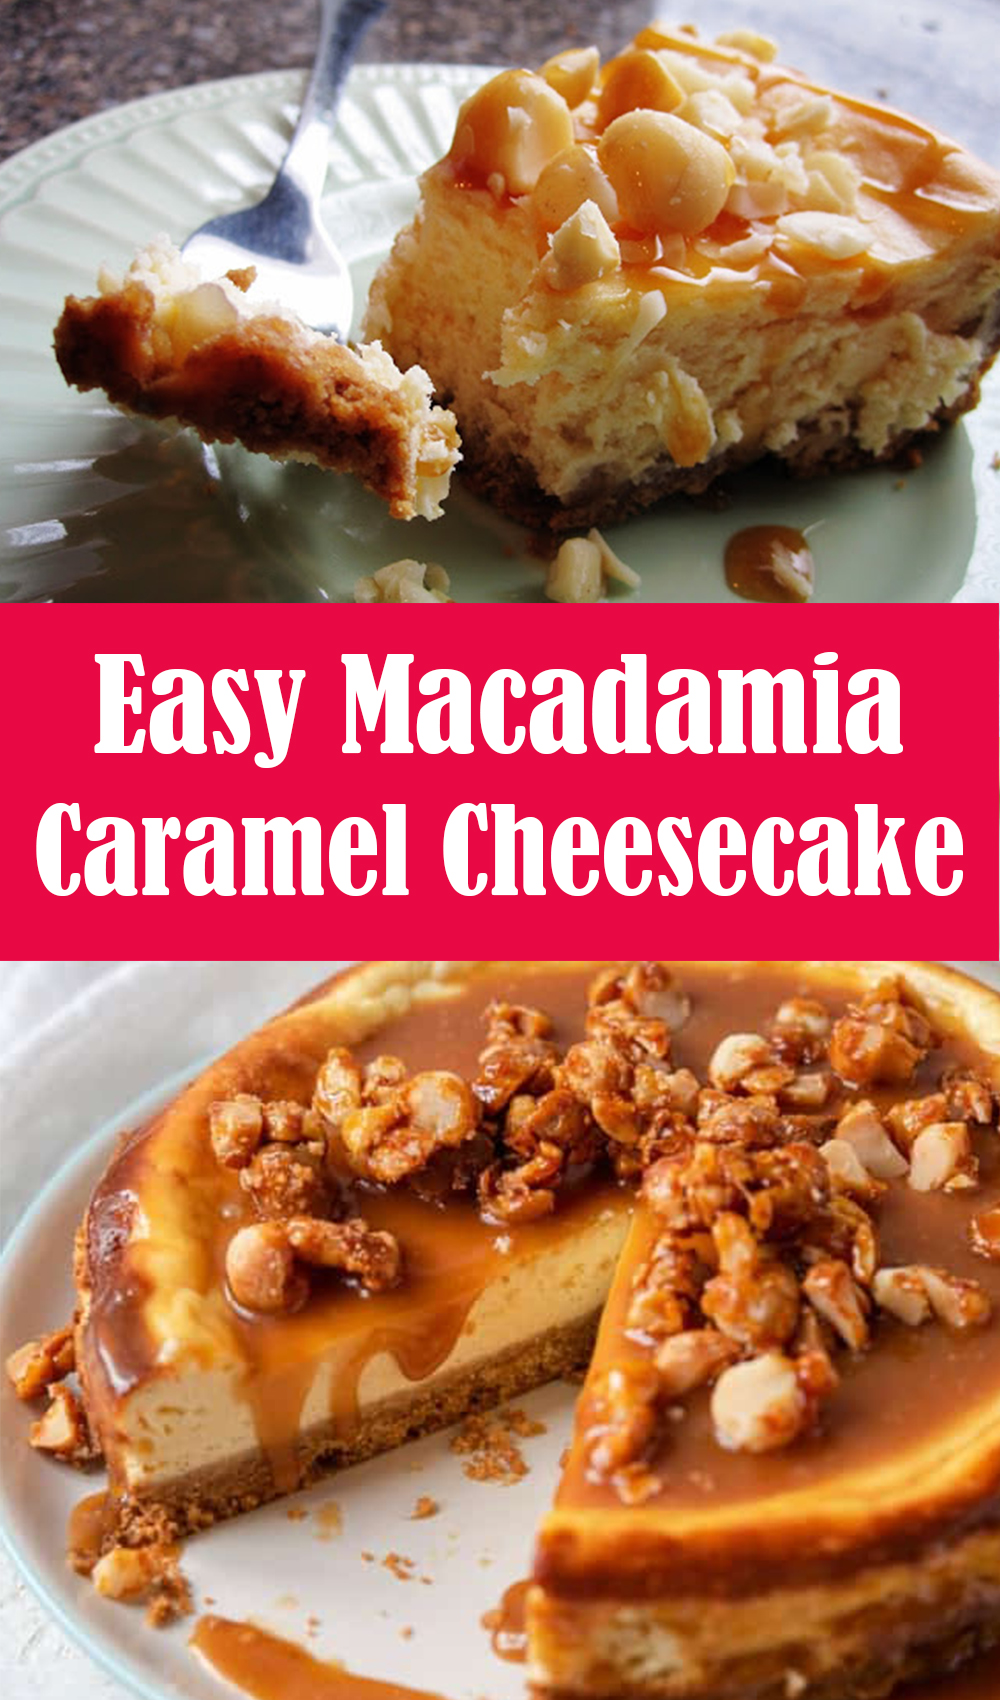 Easy Macadamia Caramel Cheesecake